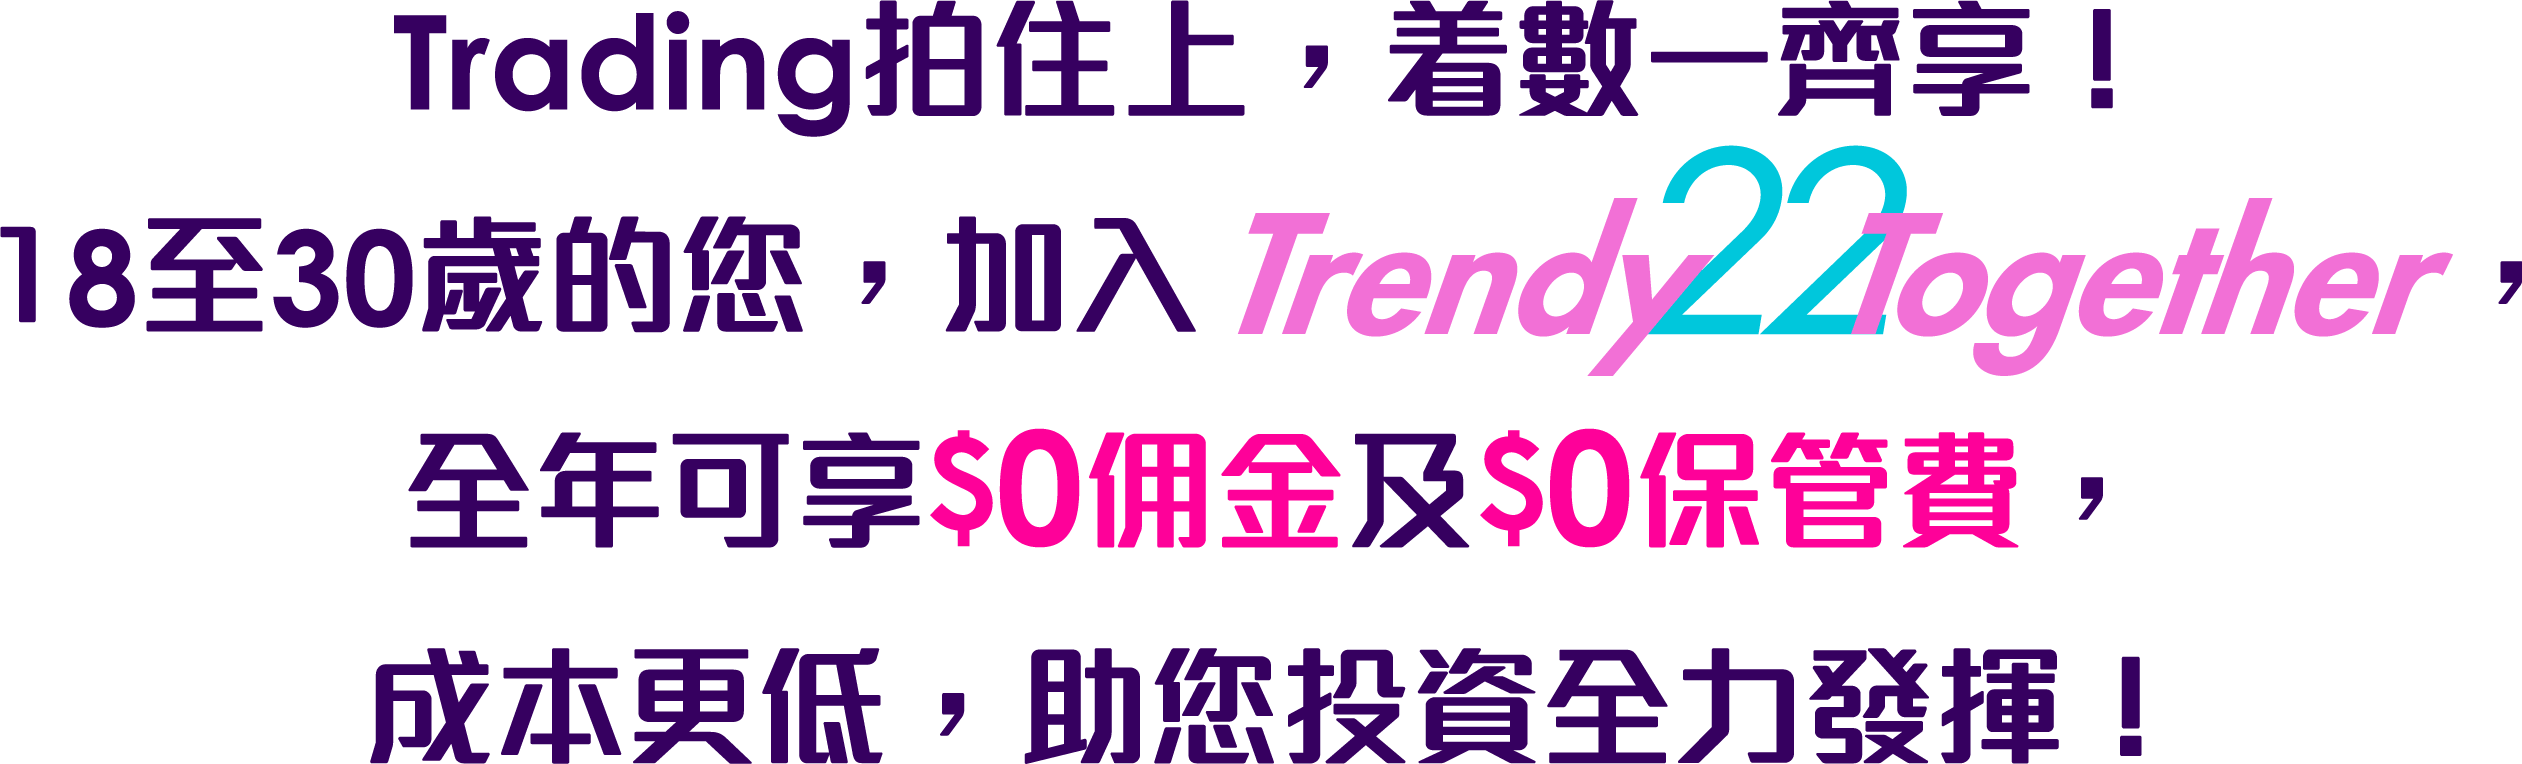 Trading拍住上，着數一齊享！18⾄30歲的您，加入TrendyTogether，全年可享HK$0佣金及HK$0保管費，成本更低，助您投資全力發揮！